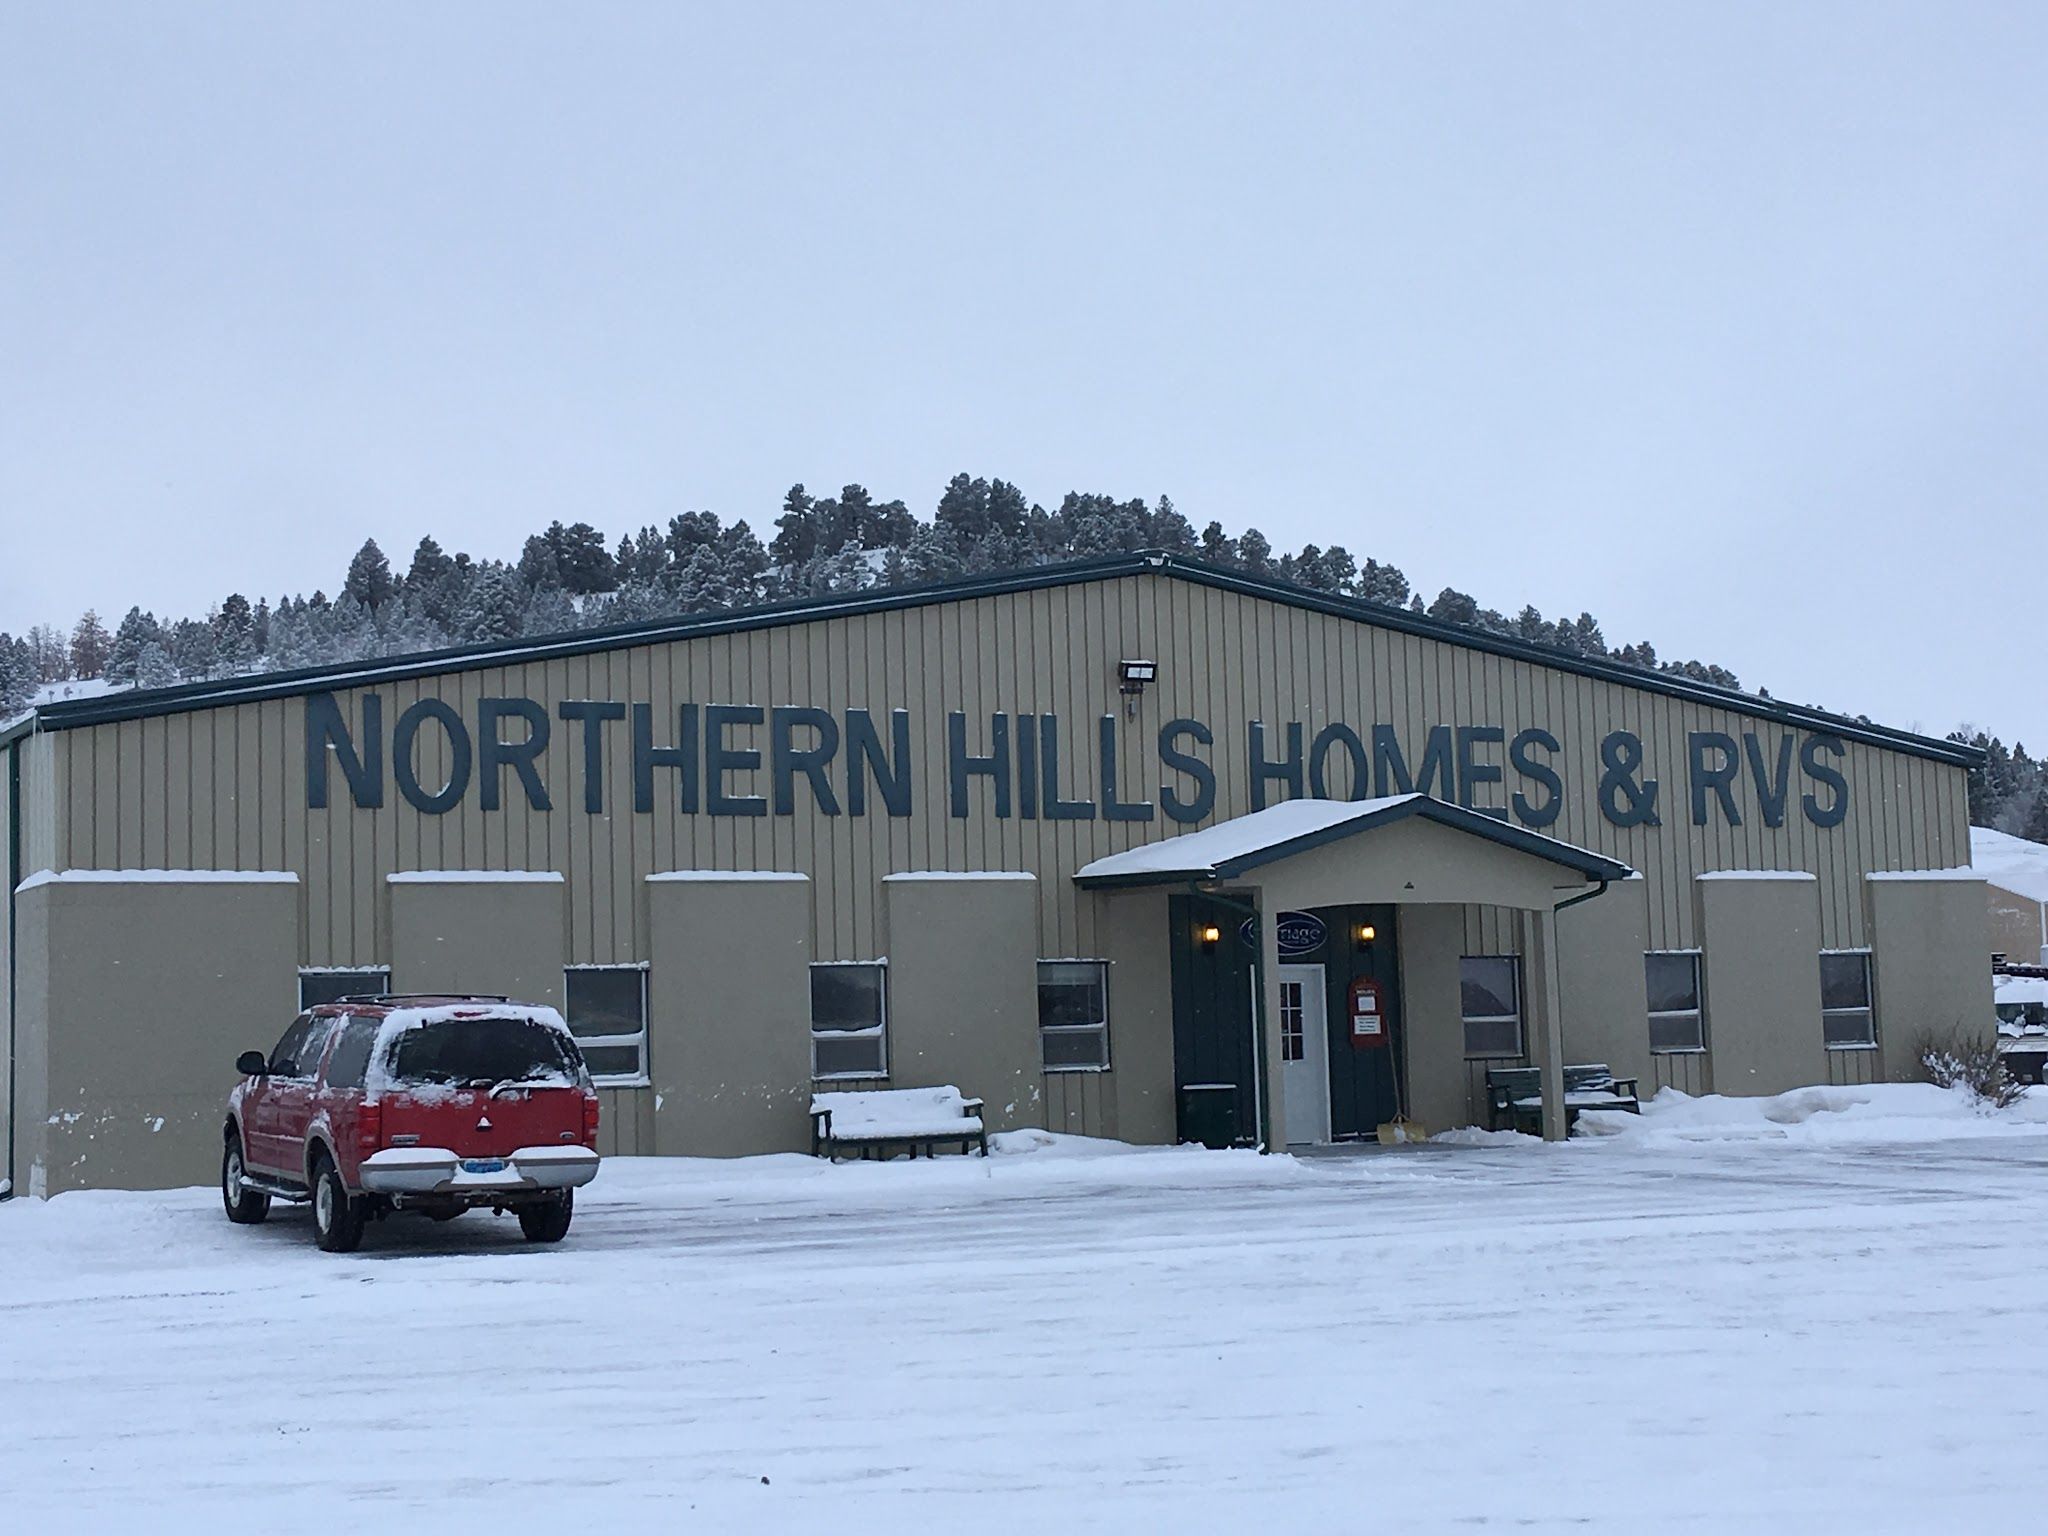 Northern Hills Homes & RVs